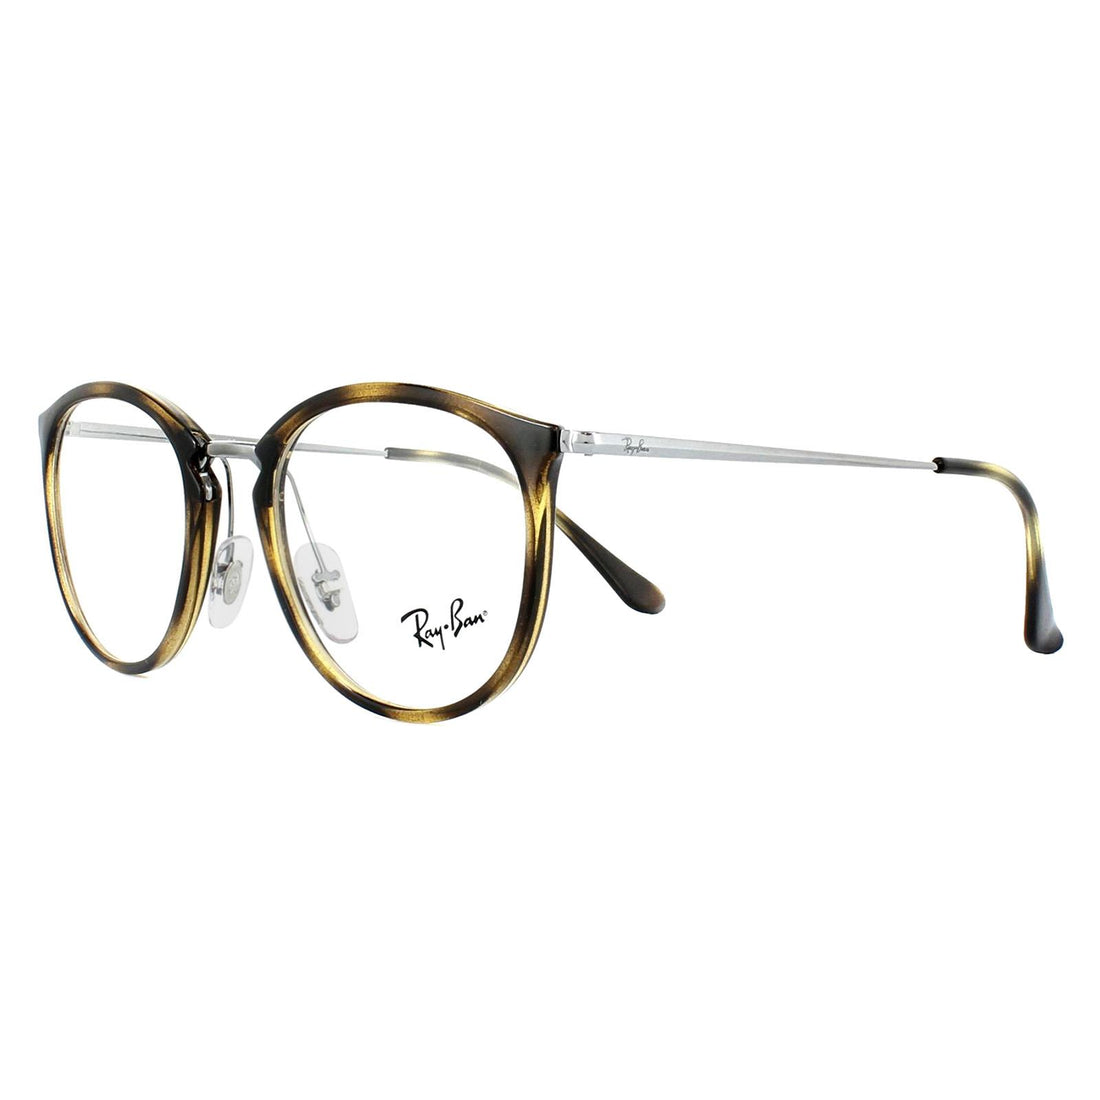 Ray-Ban Glasses Frames 7140 2012 Havana 49mm